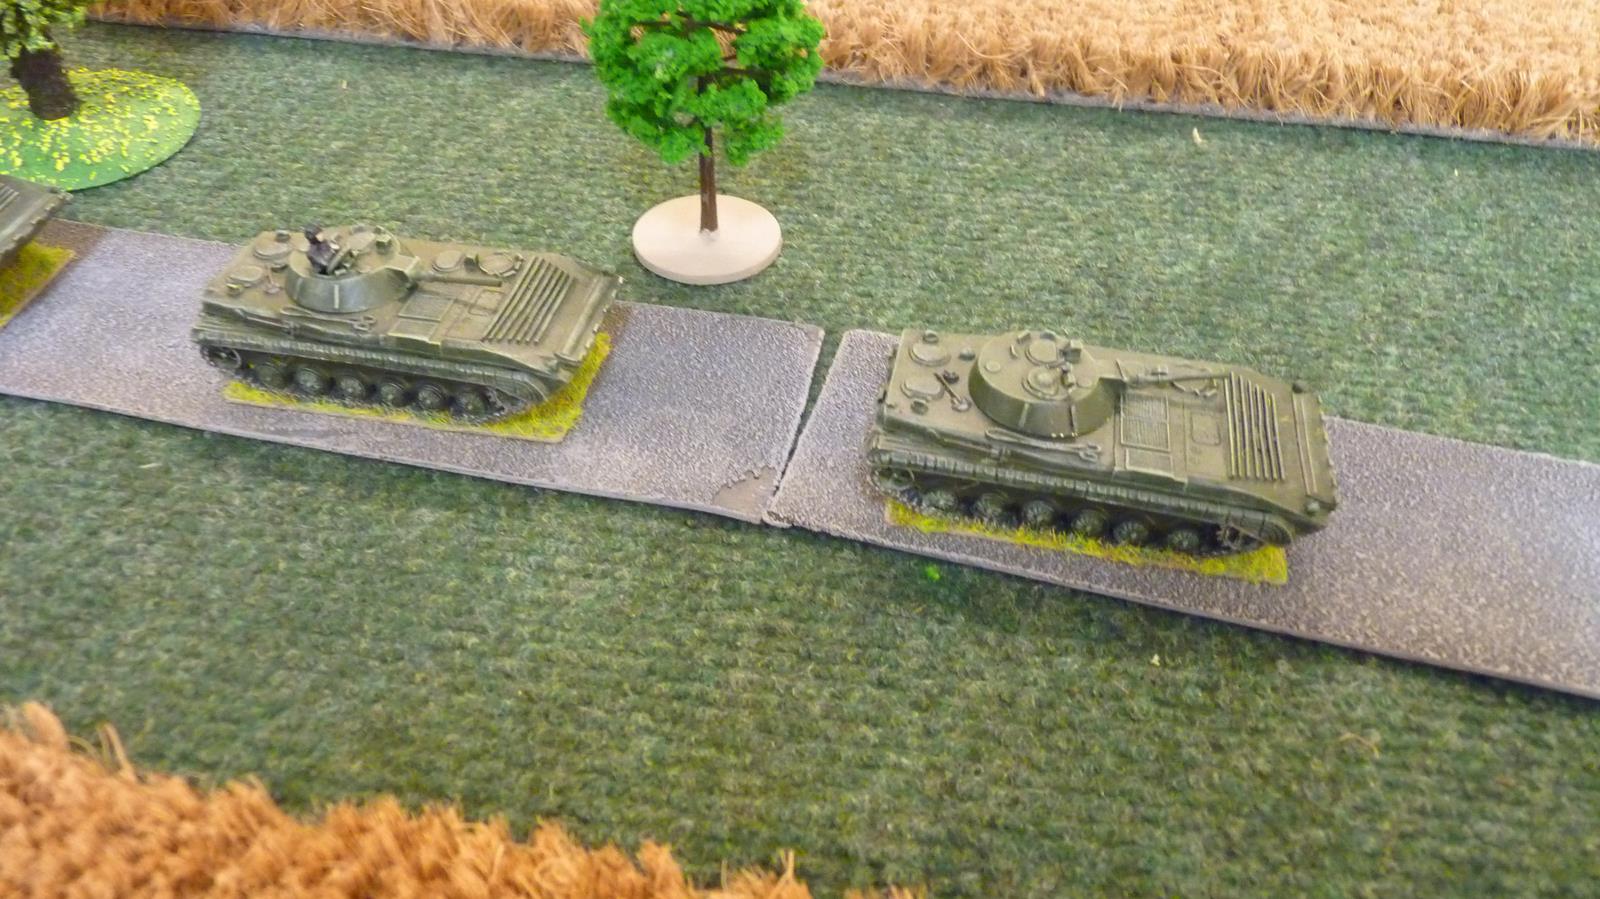 The Soviet recce platoon advances along the road